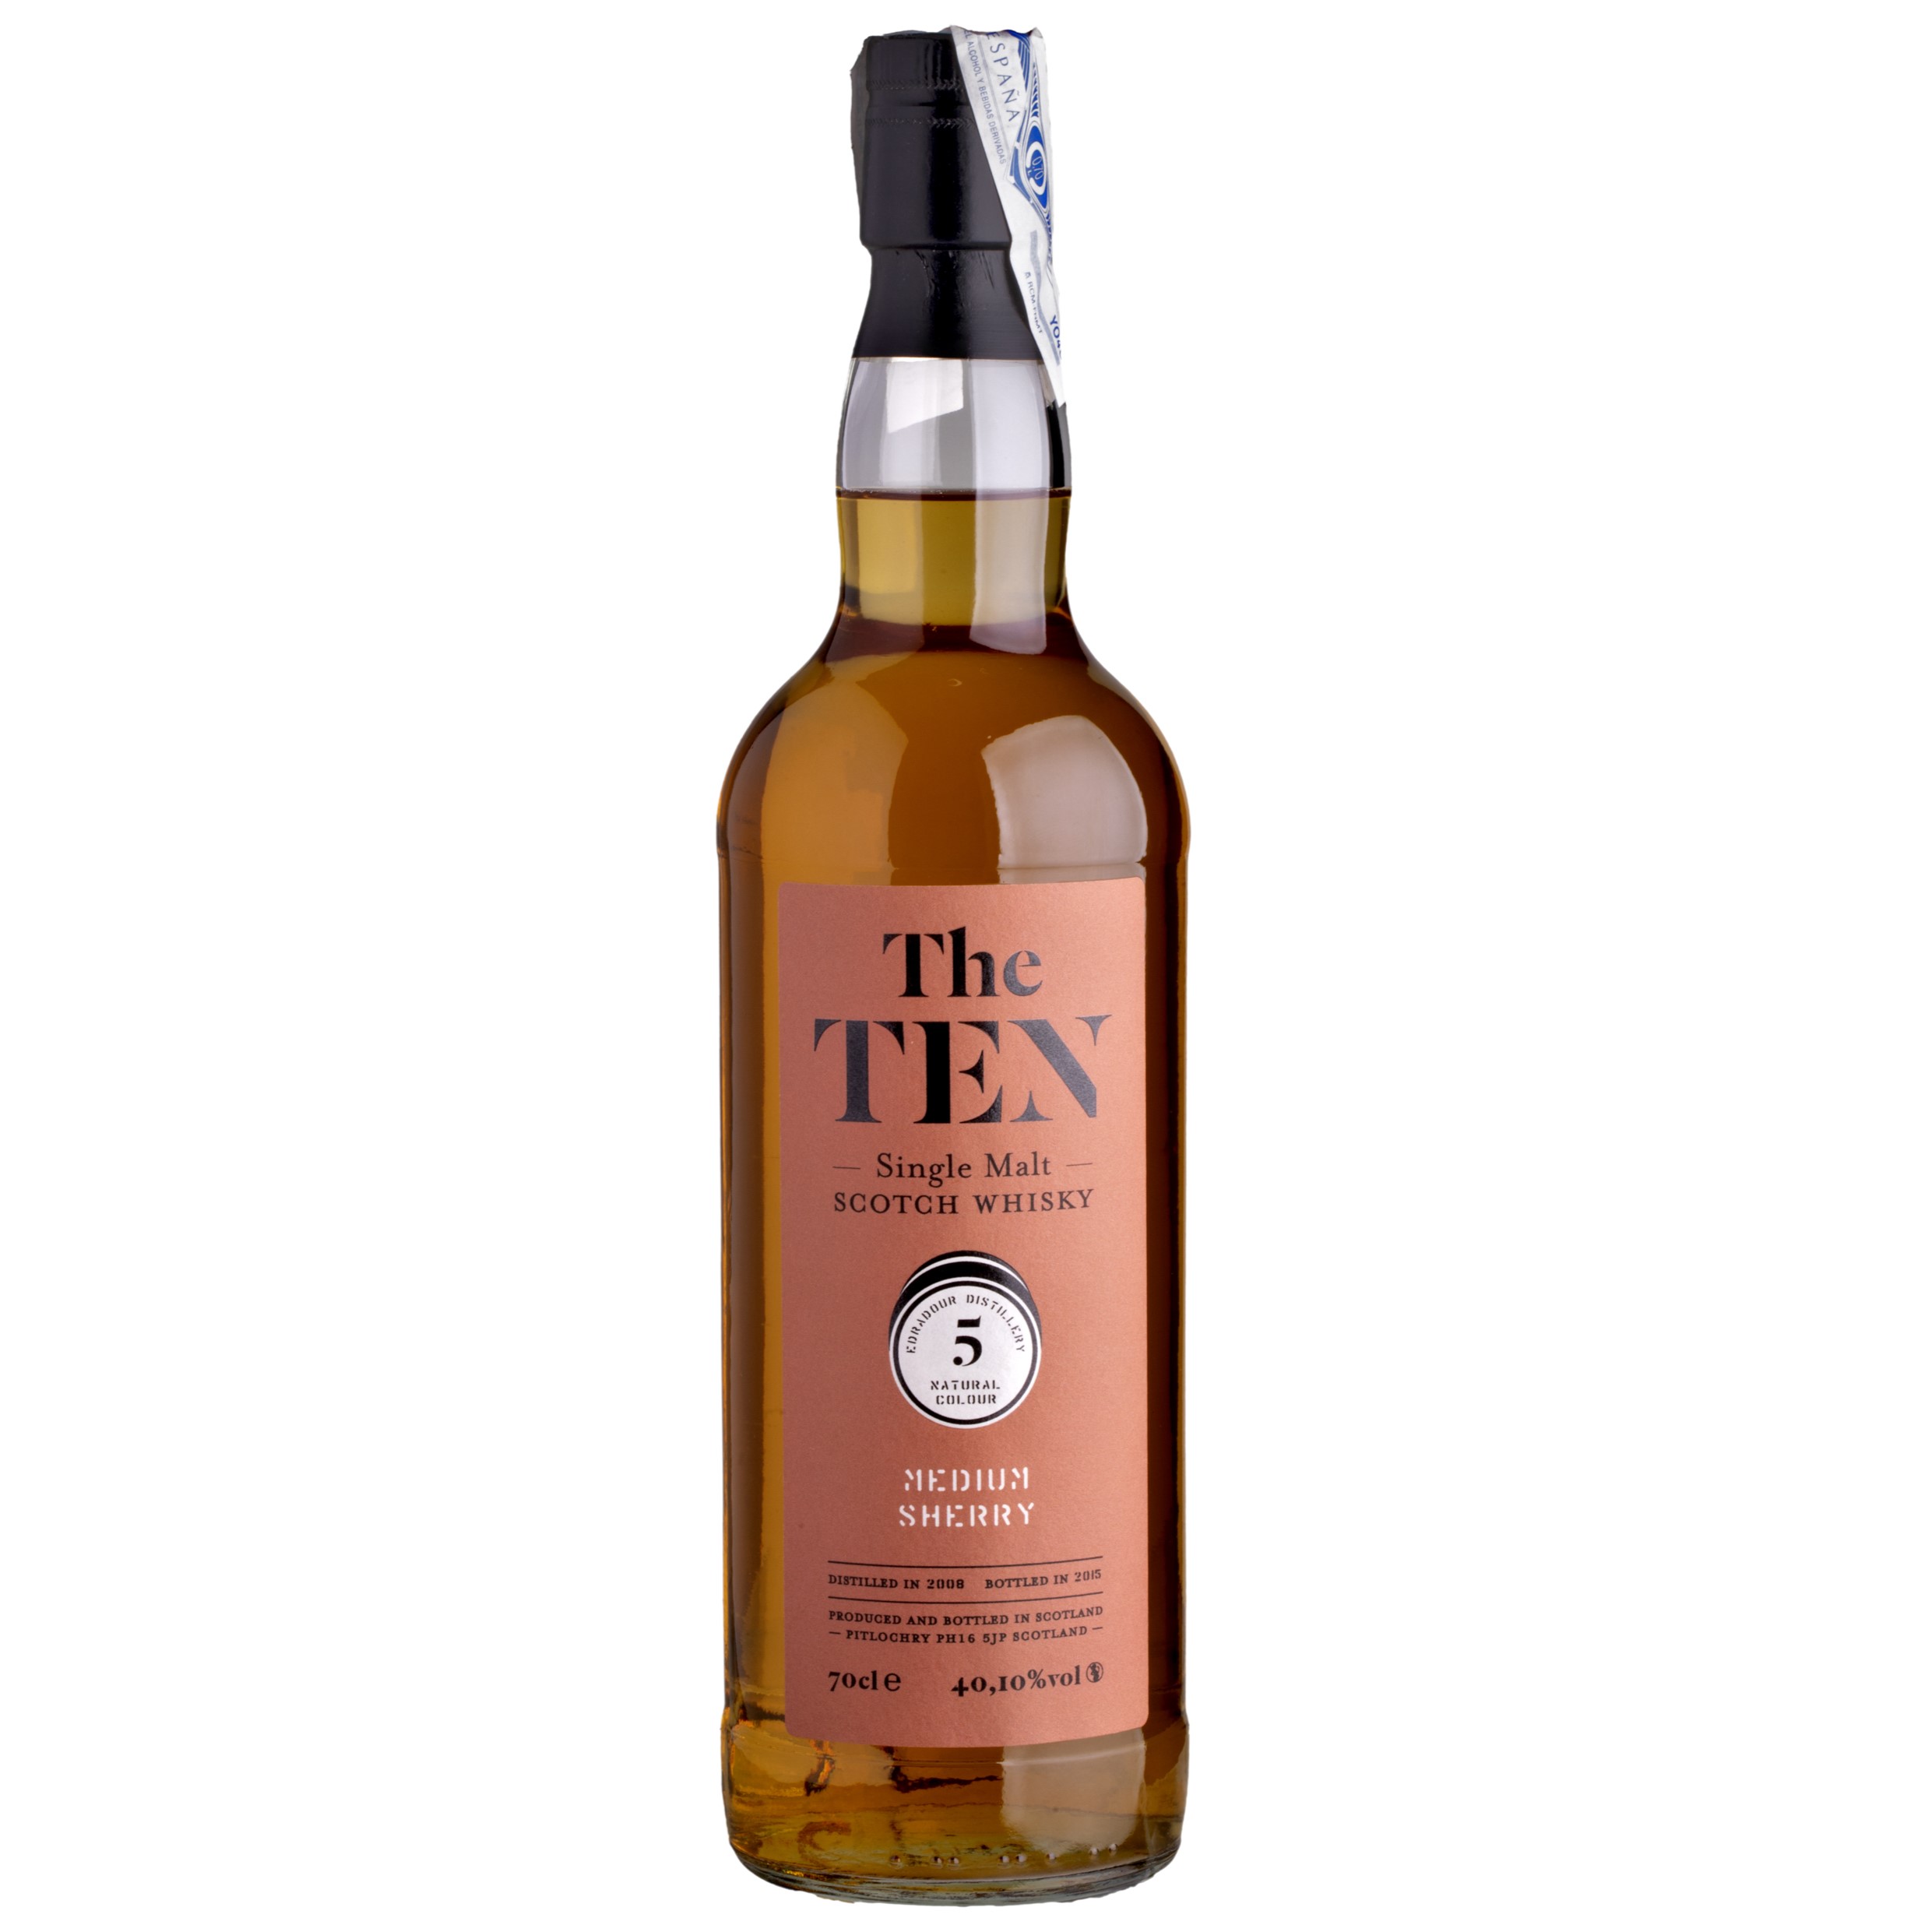 Whisky The Ten #5 Edradour 7 YO Medium Sherry Highland Single Malt 40,1%